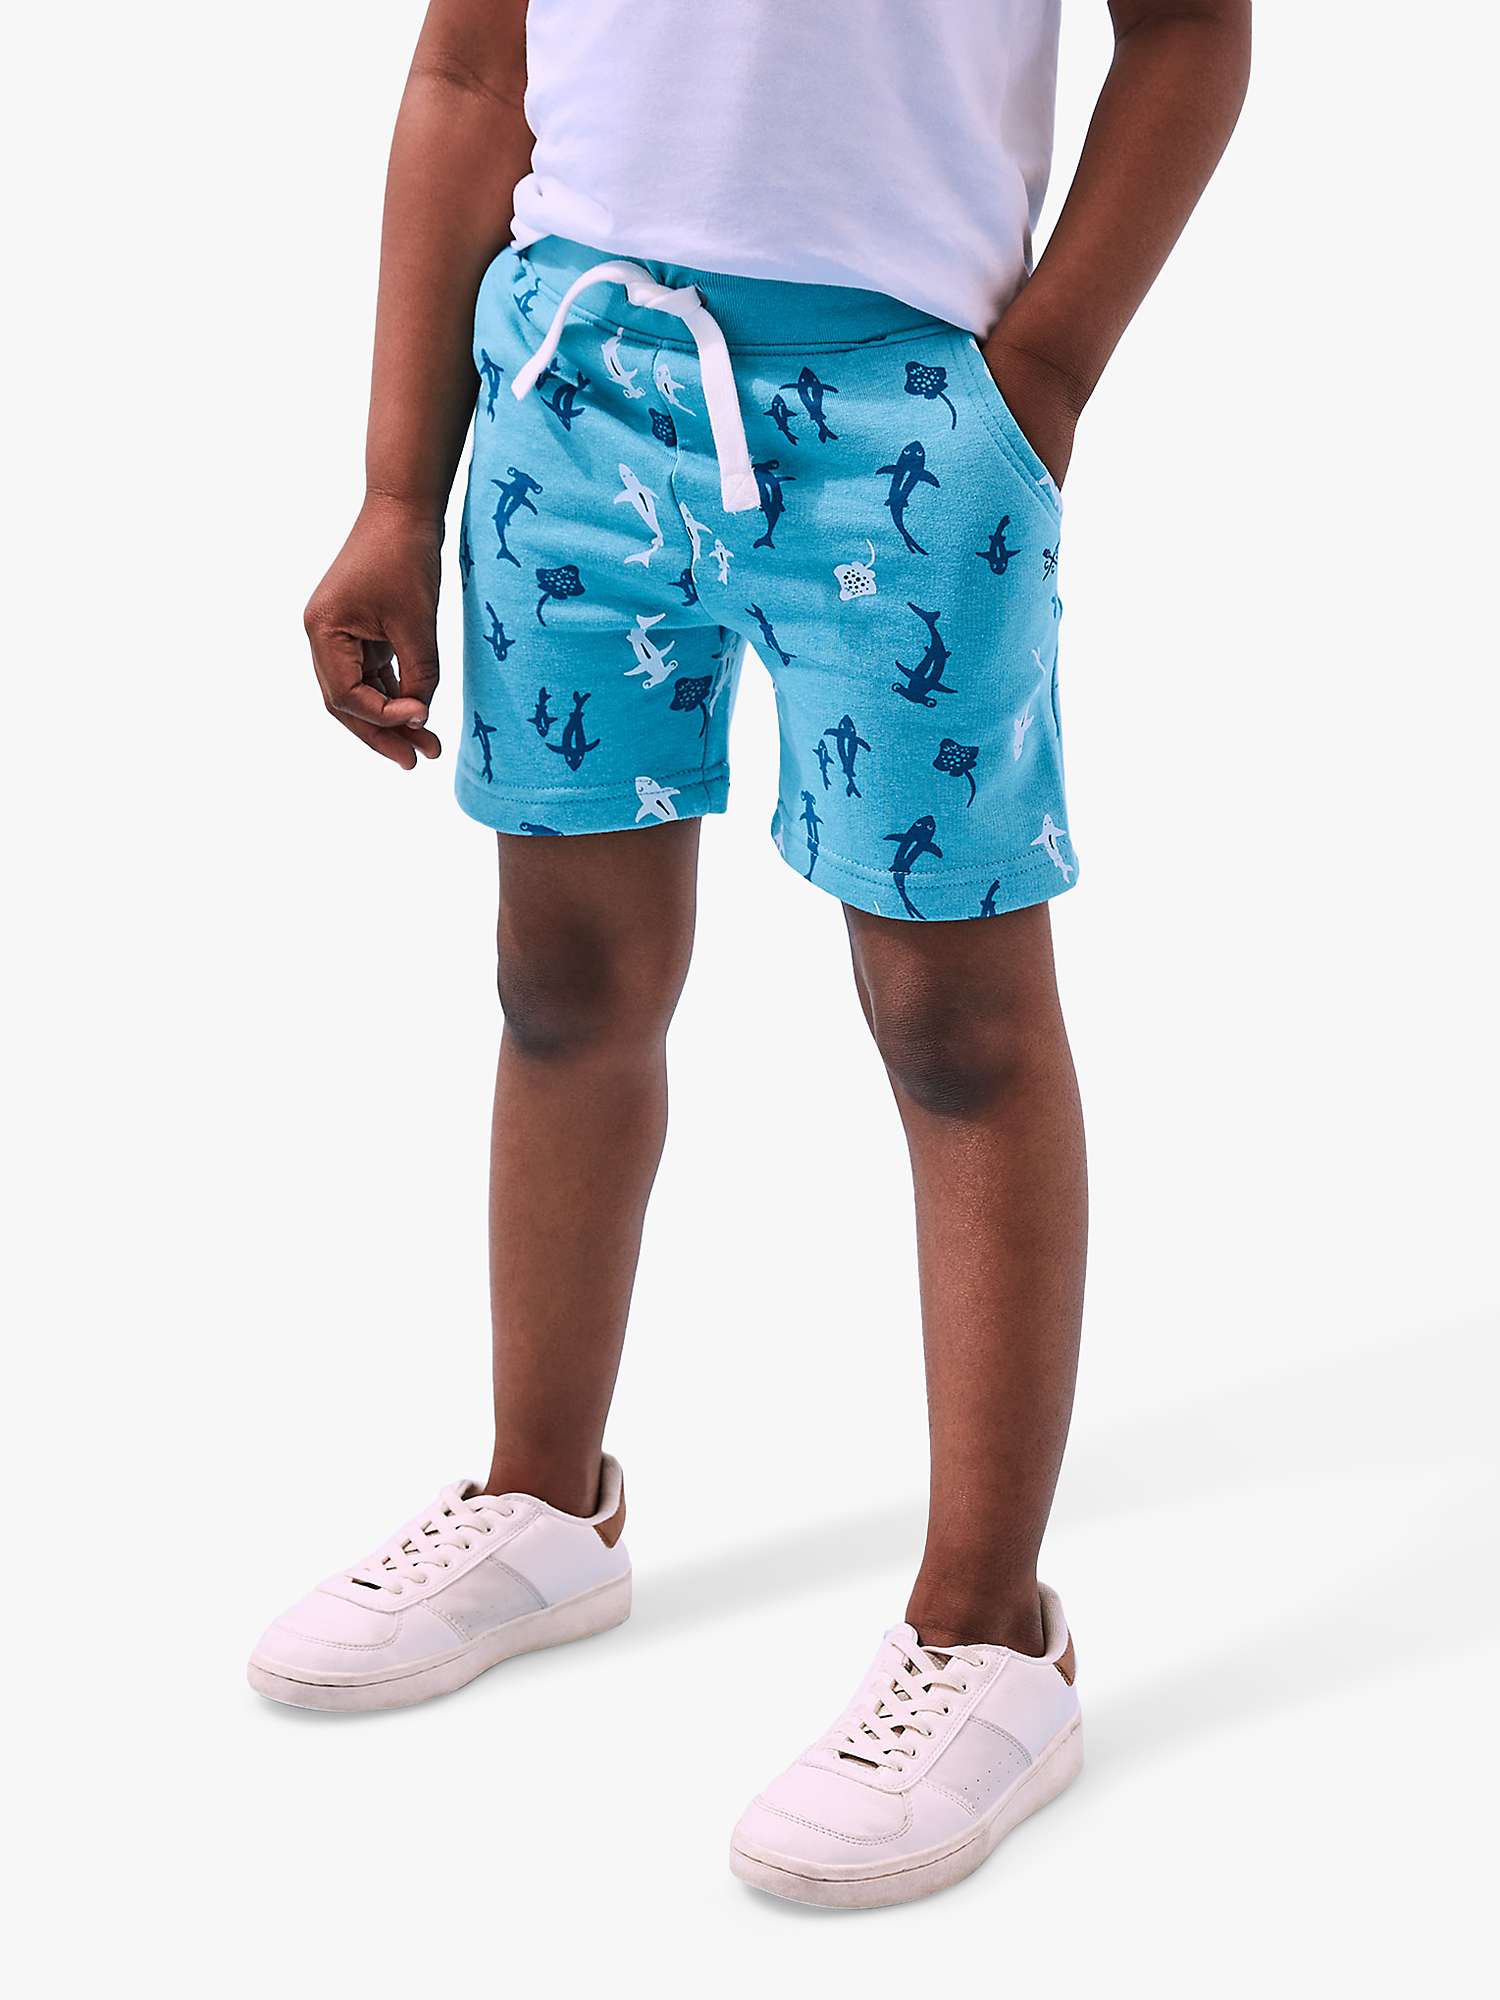 Buy Crew Clothing Kids' Shark Print & Side Stripe Jersey Shorts Set, Pack of 2, Blue/Green Online at johnlewis.com